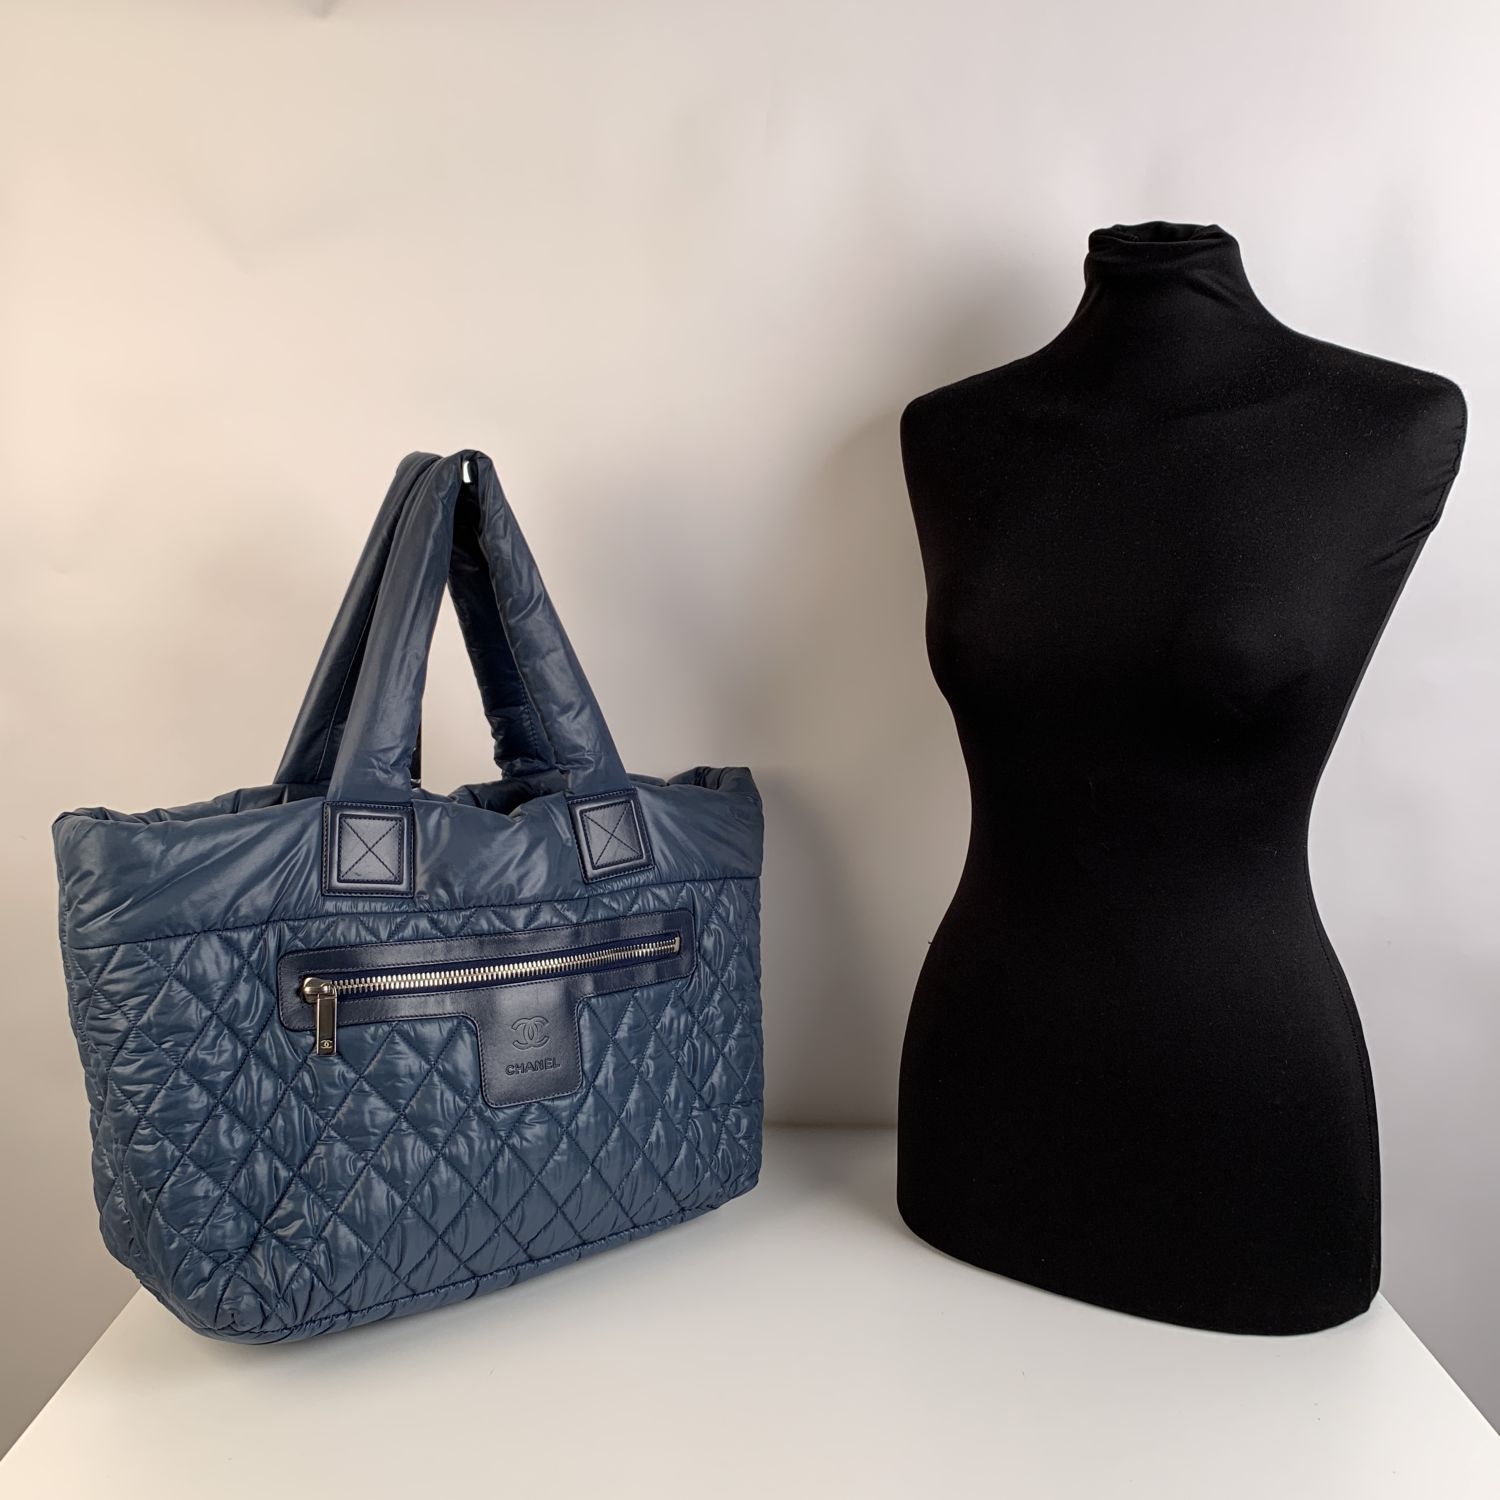 Chanel Blue Black Nylon Reversible Coco Cocoon Tote Bag Handbag - Image 2 of 8